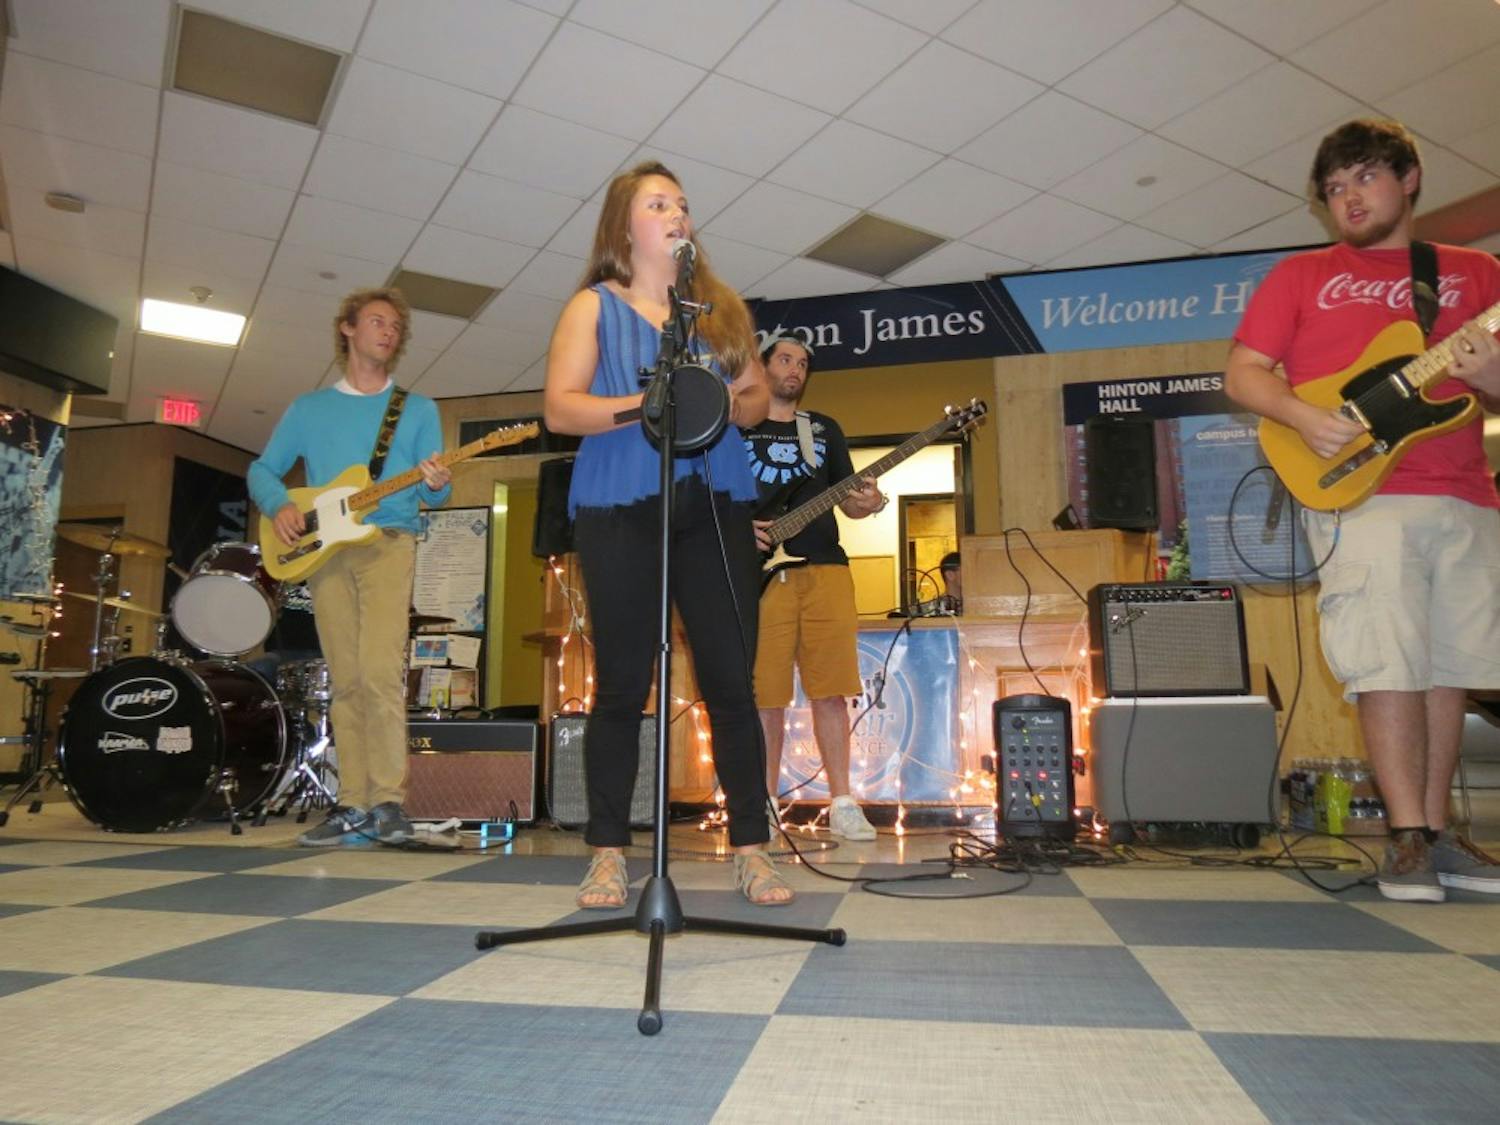 Carolina Jams is now offering lessons on guitar, piano, bass guitar and ukulele. Photo courtesy of Zac Gonzalez.